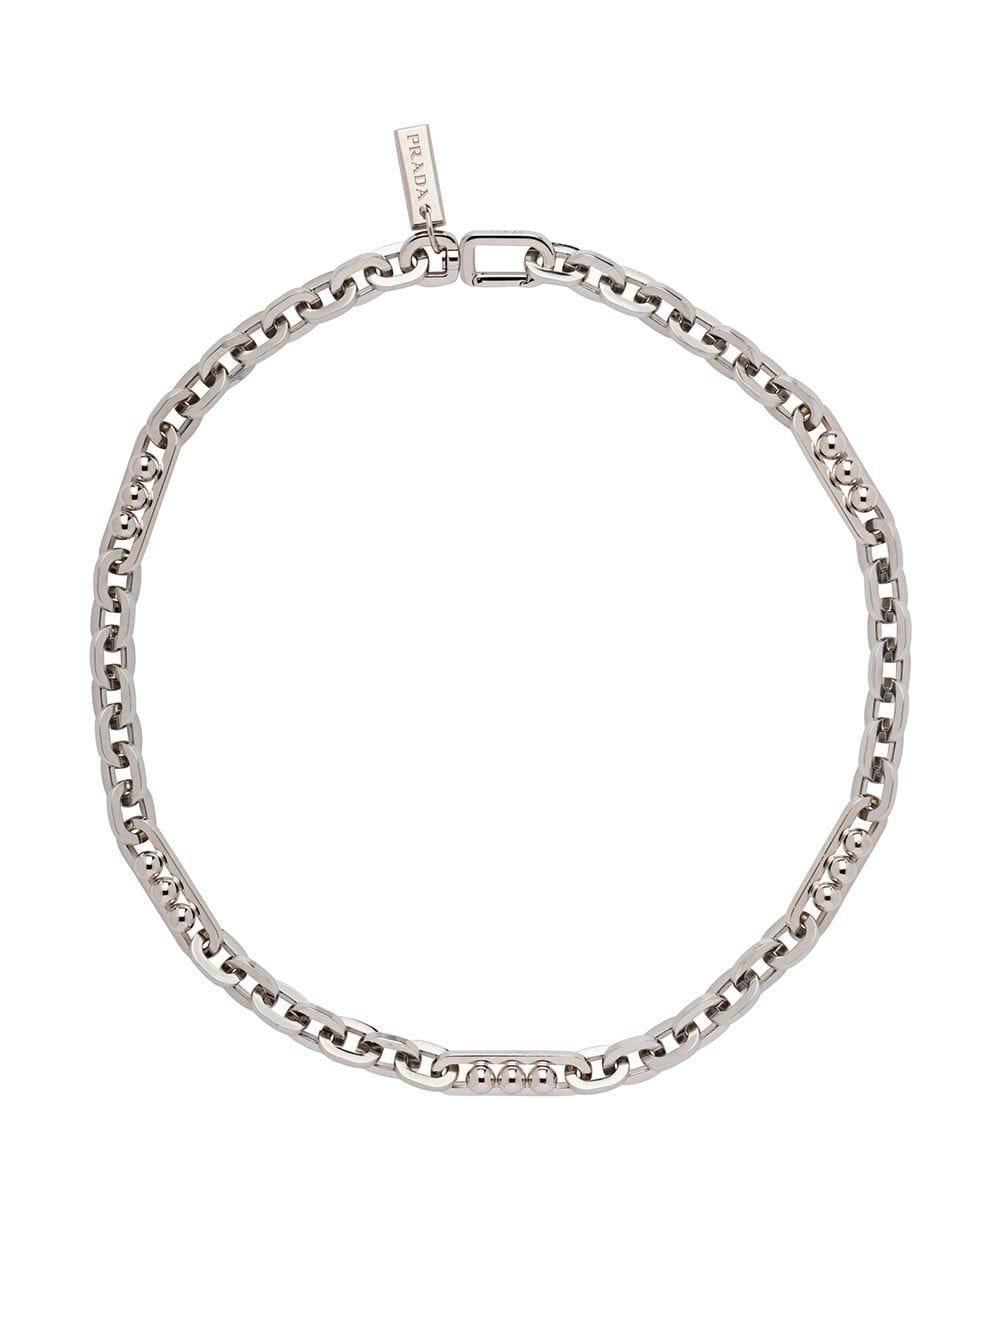 Prada Chain Necklace in Metallic for Men - Lyst